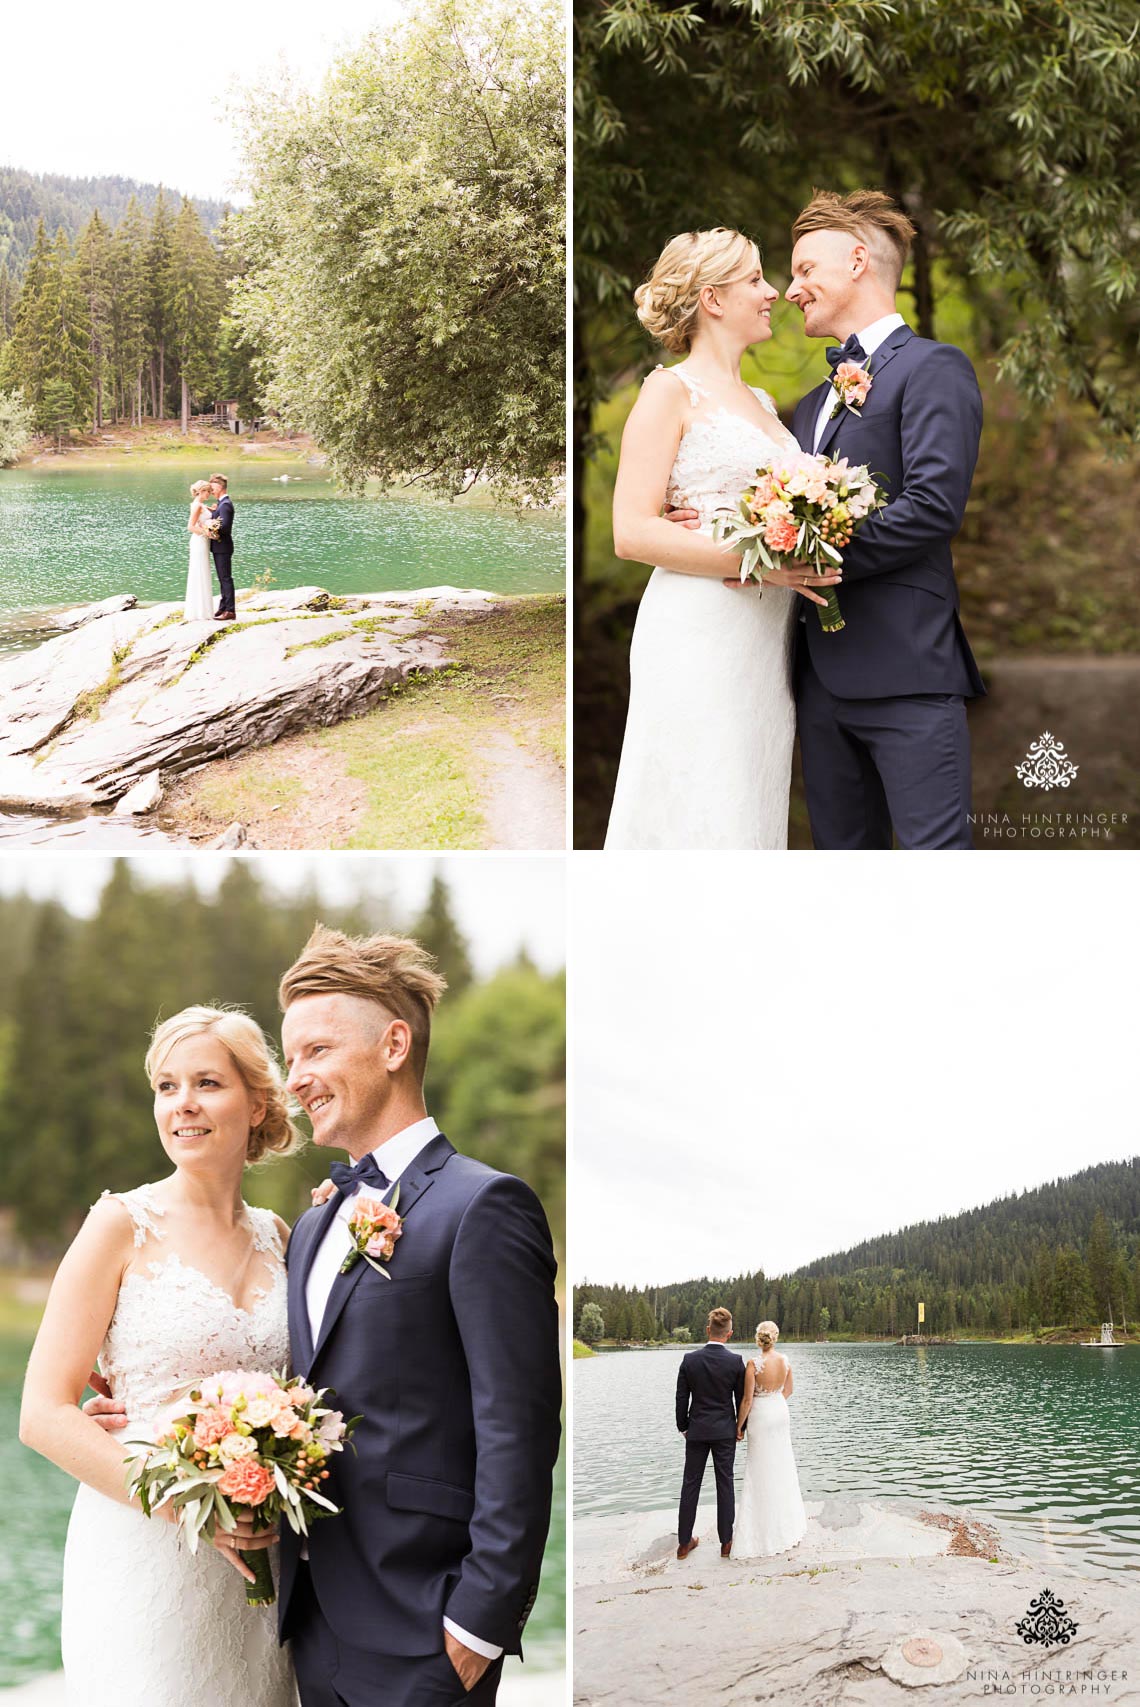 Lake Cauma Wedding with Jenny & Alex | Laax, Flims | Switzerland - Blog of Nina Hintringer Photography - Wedding Photography, Wedding Reportage and Destination Weddings